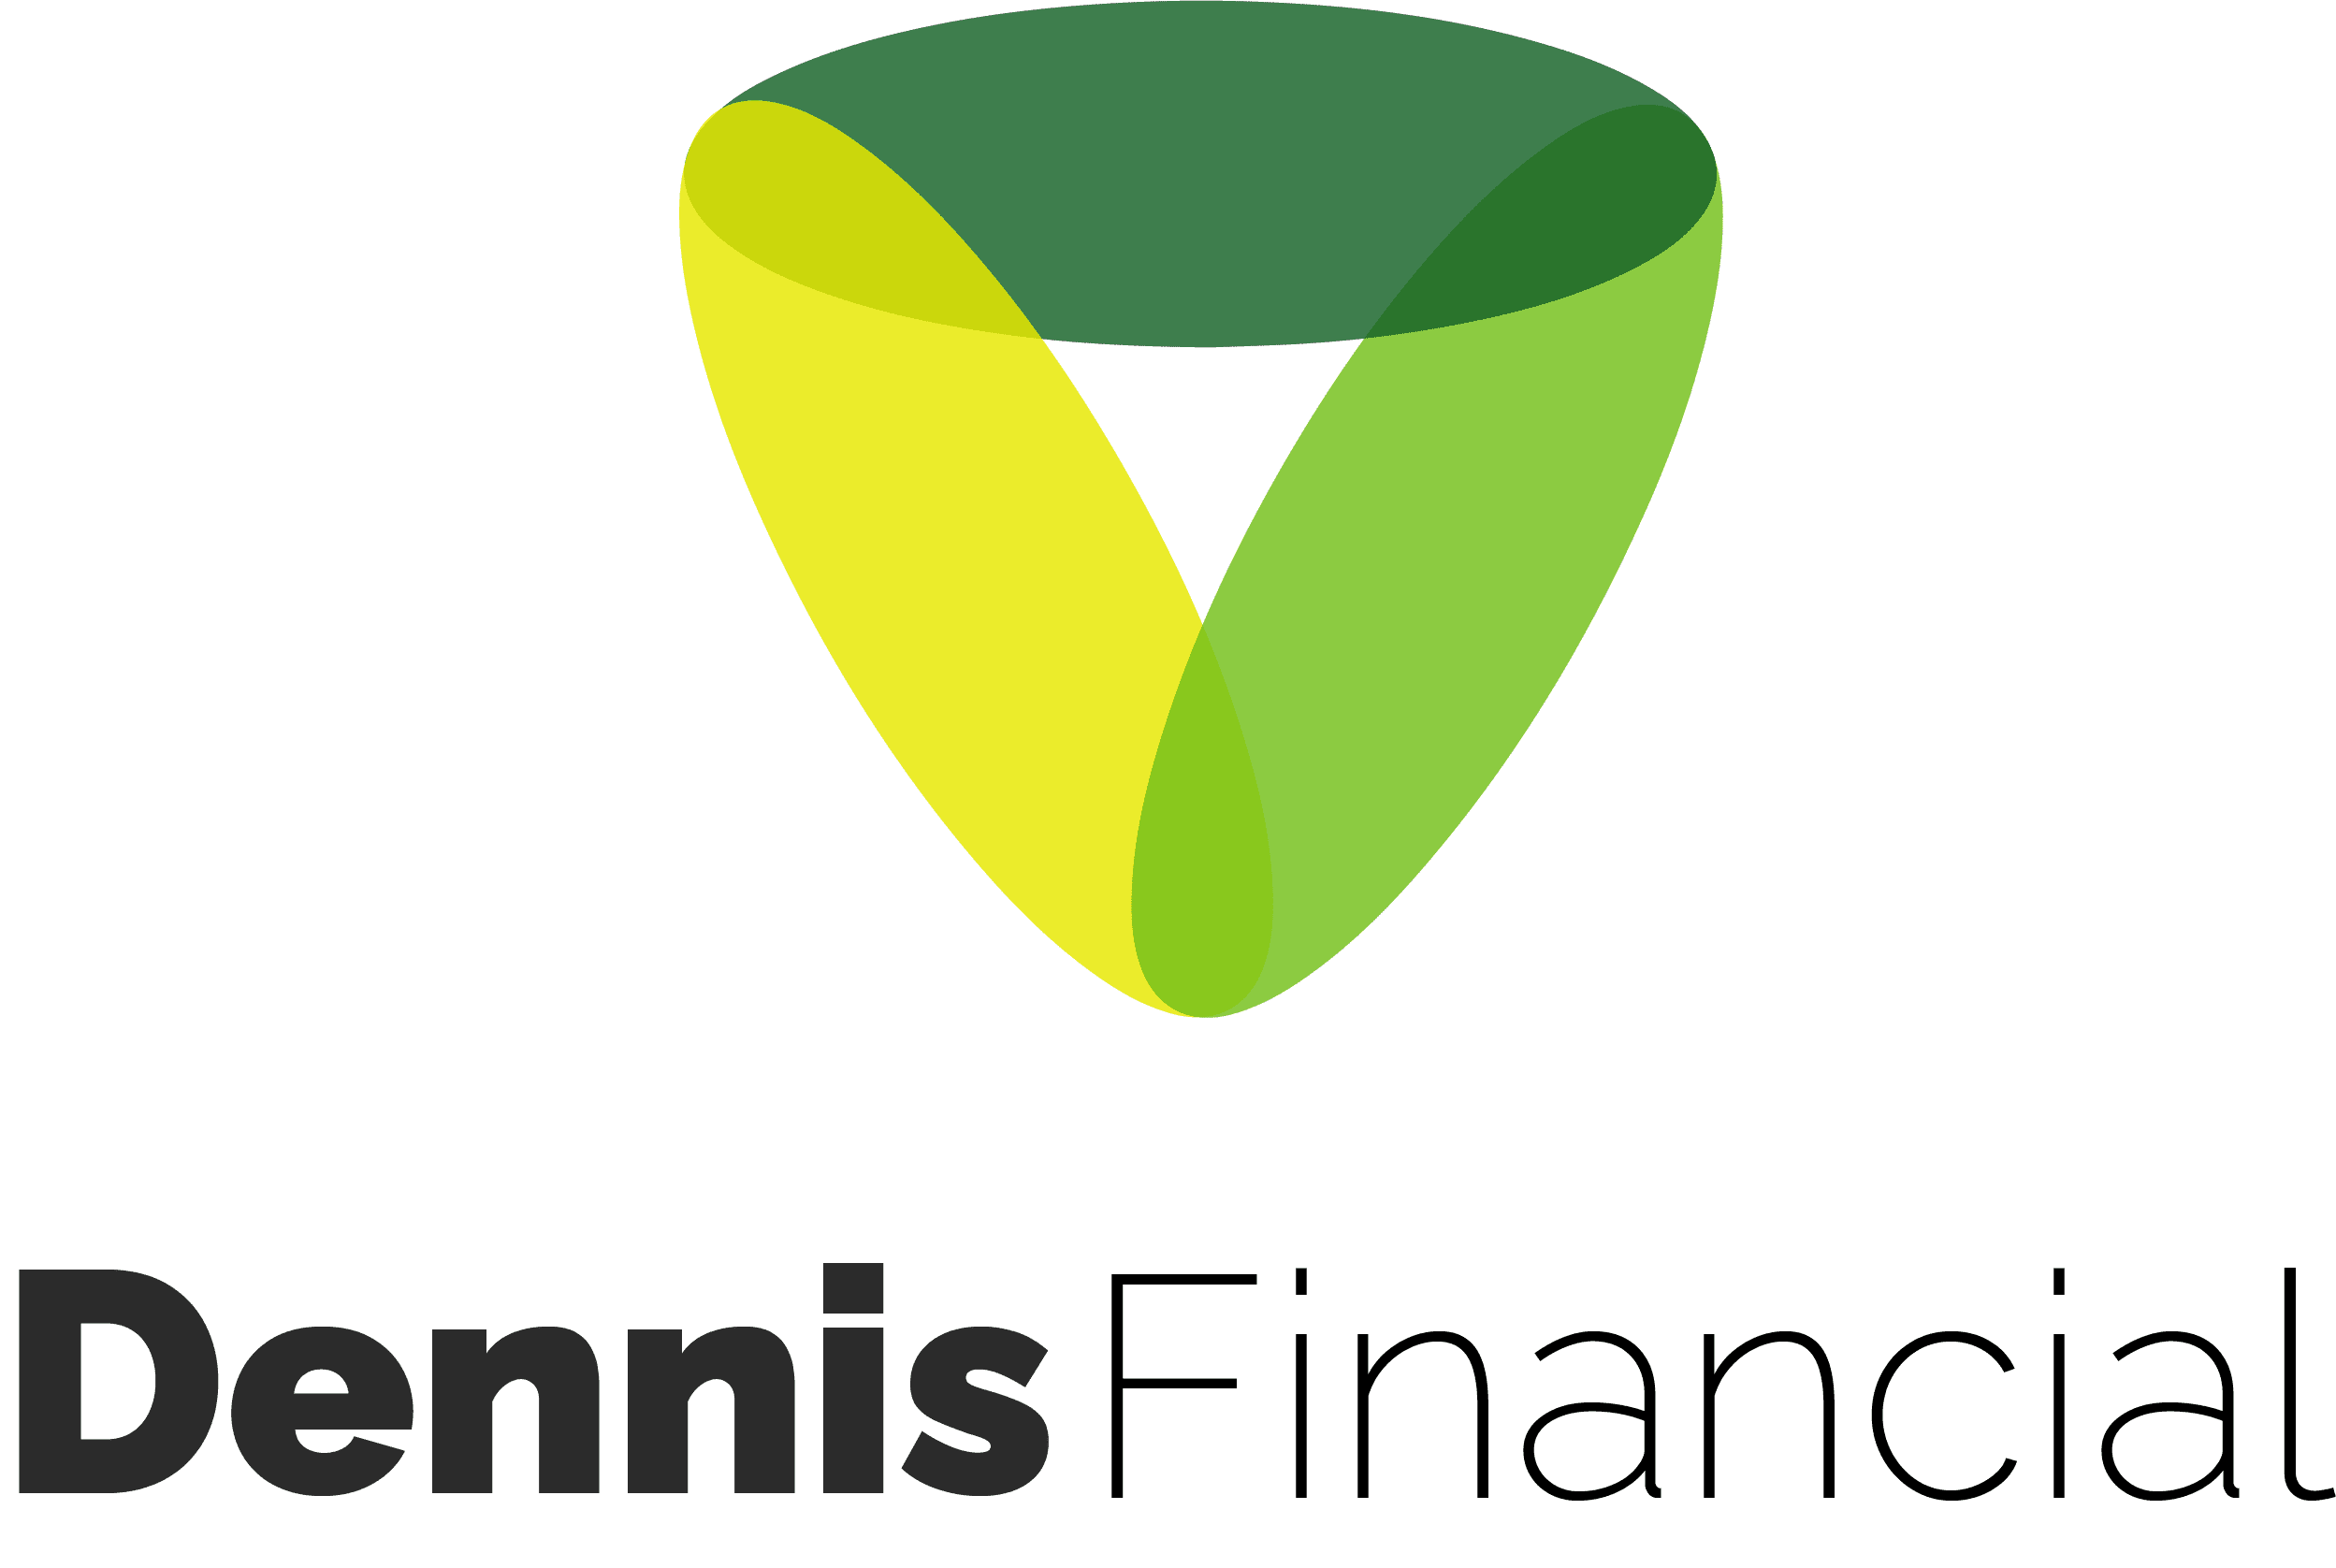 https://retirementrealizedfinancial.com/wp-content/uploads/sites/185/2022/10/Dennis-Financial-_-Vertical-_-Full-Logo-_-Black_1.png